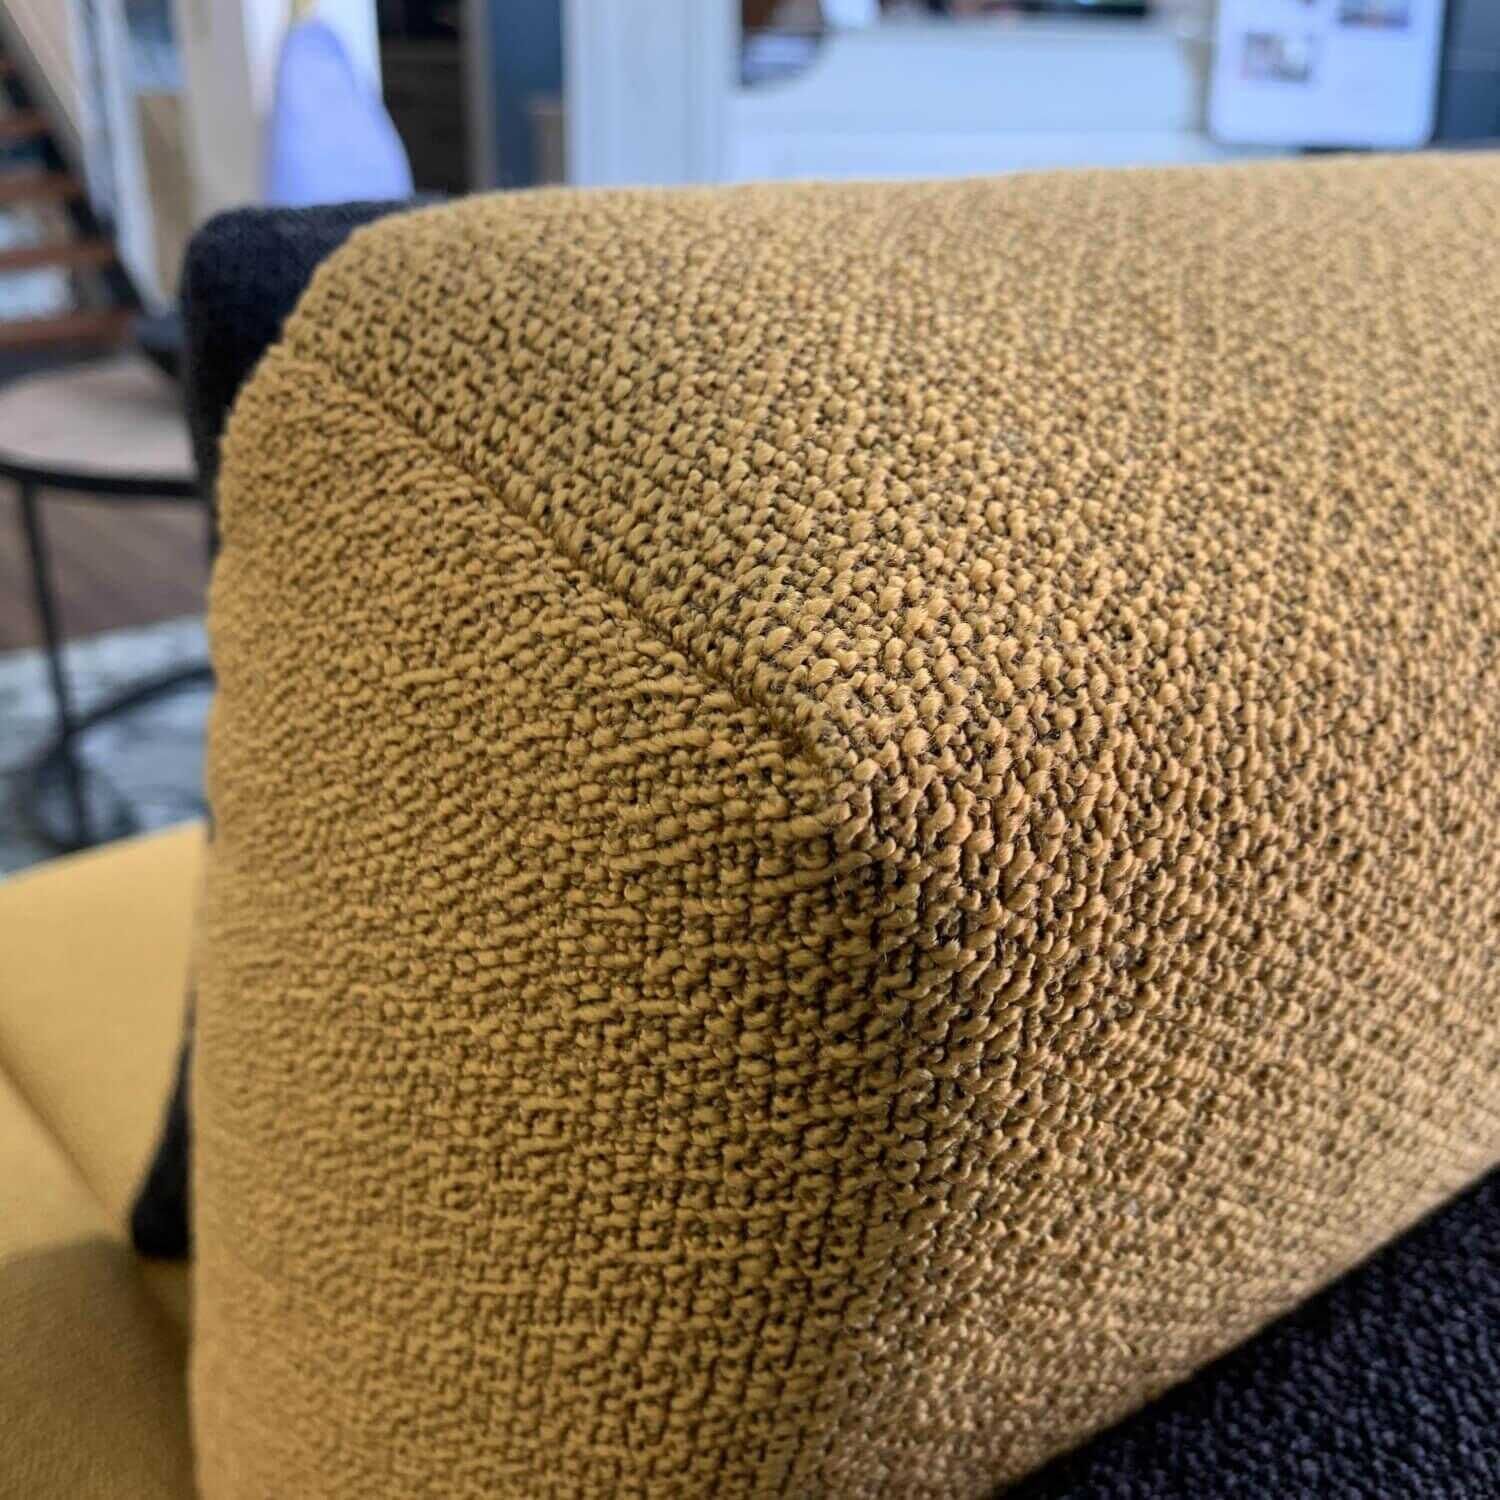 Sofa Upgrade Stoff 20-Q2 Gelb Grau mit 2 Kissen